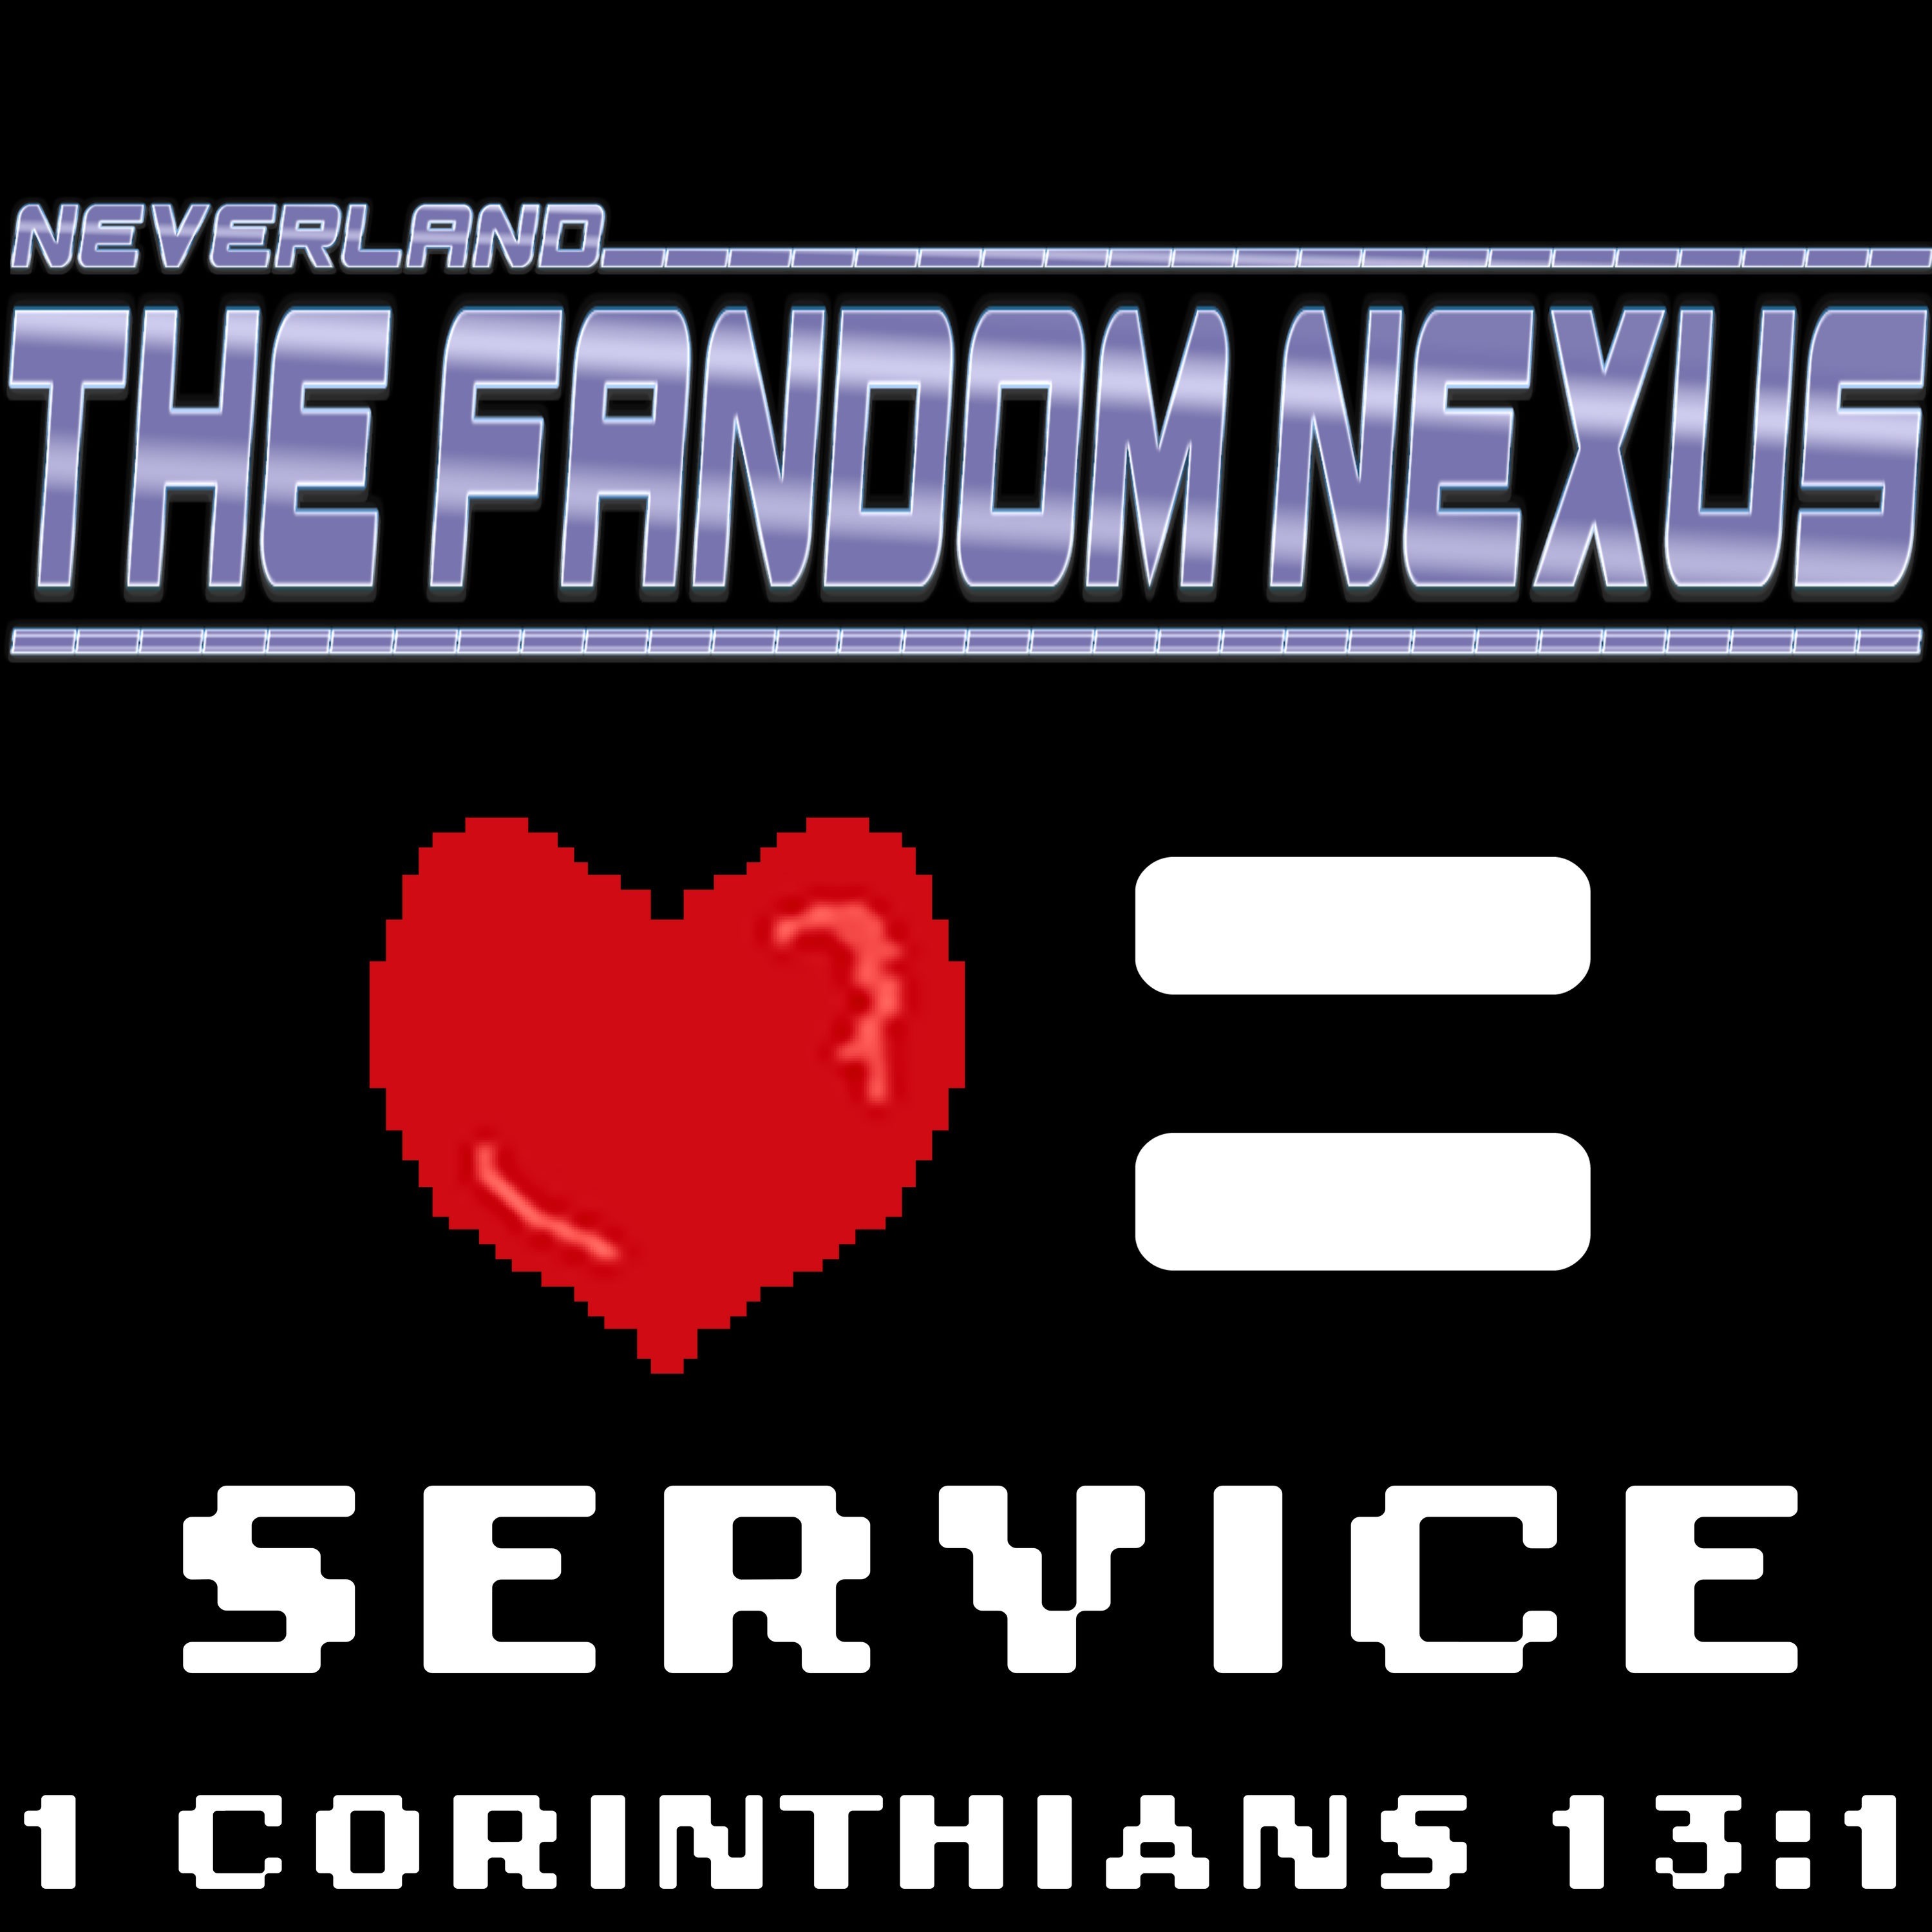 Neverland Revolution - The Fandom Nexus 412